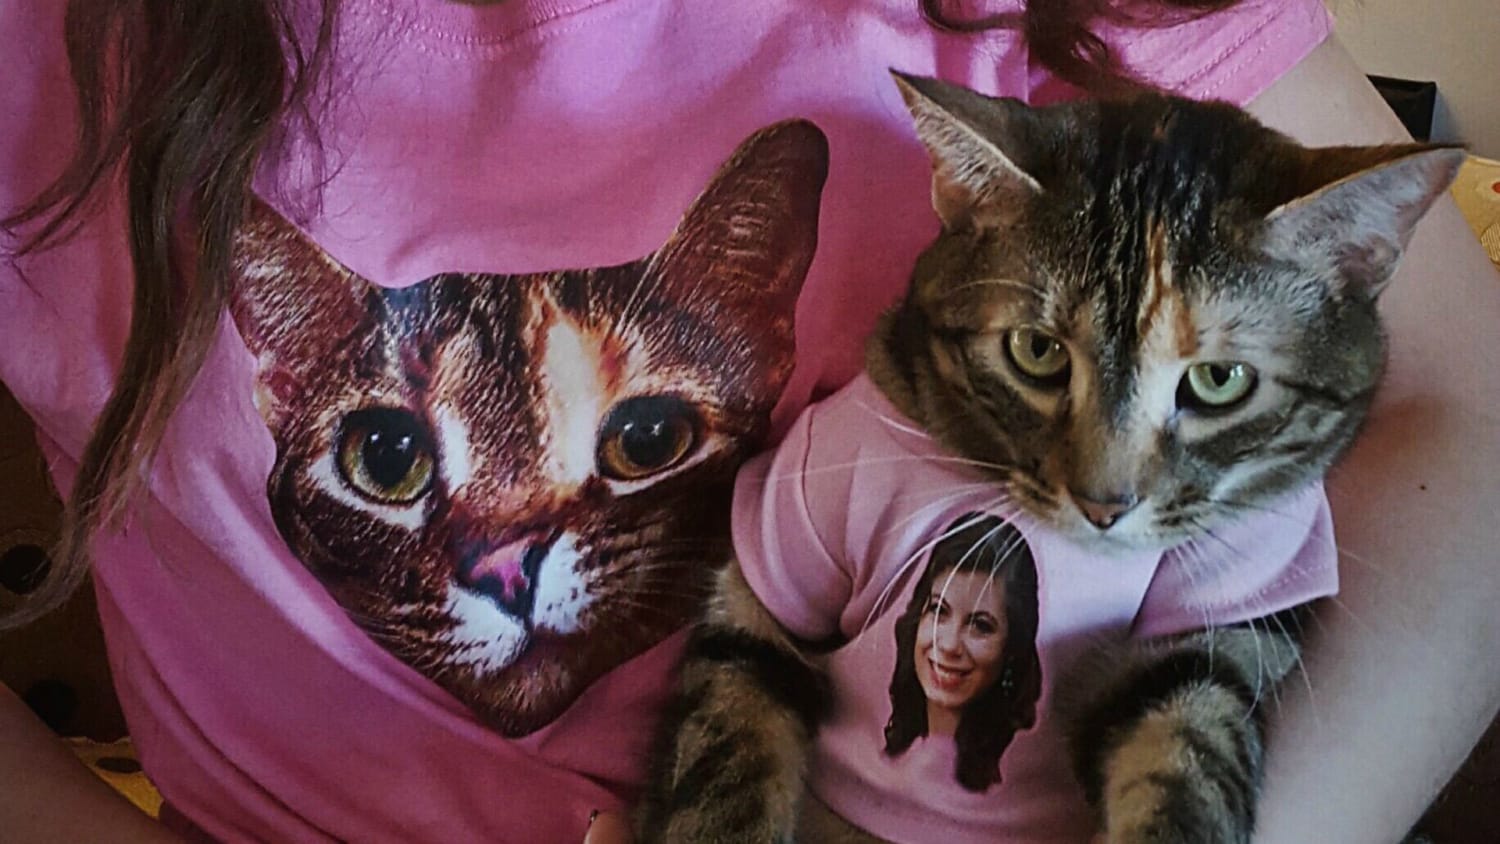 her cat wear hilarious matching T-shirts